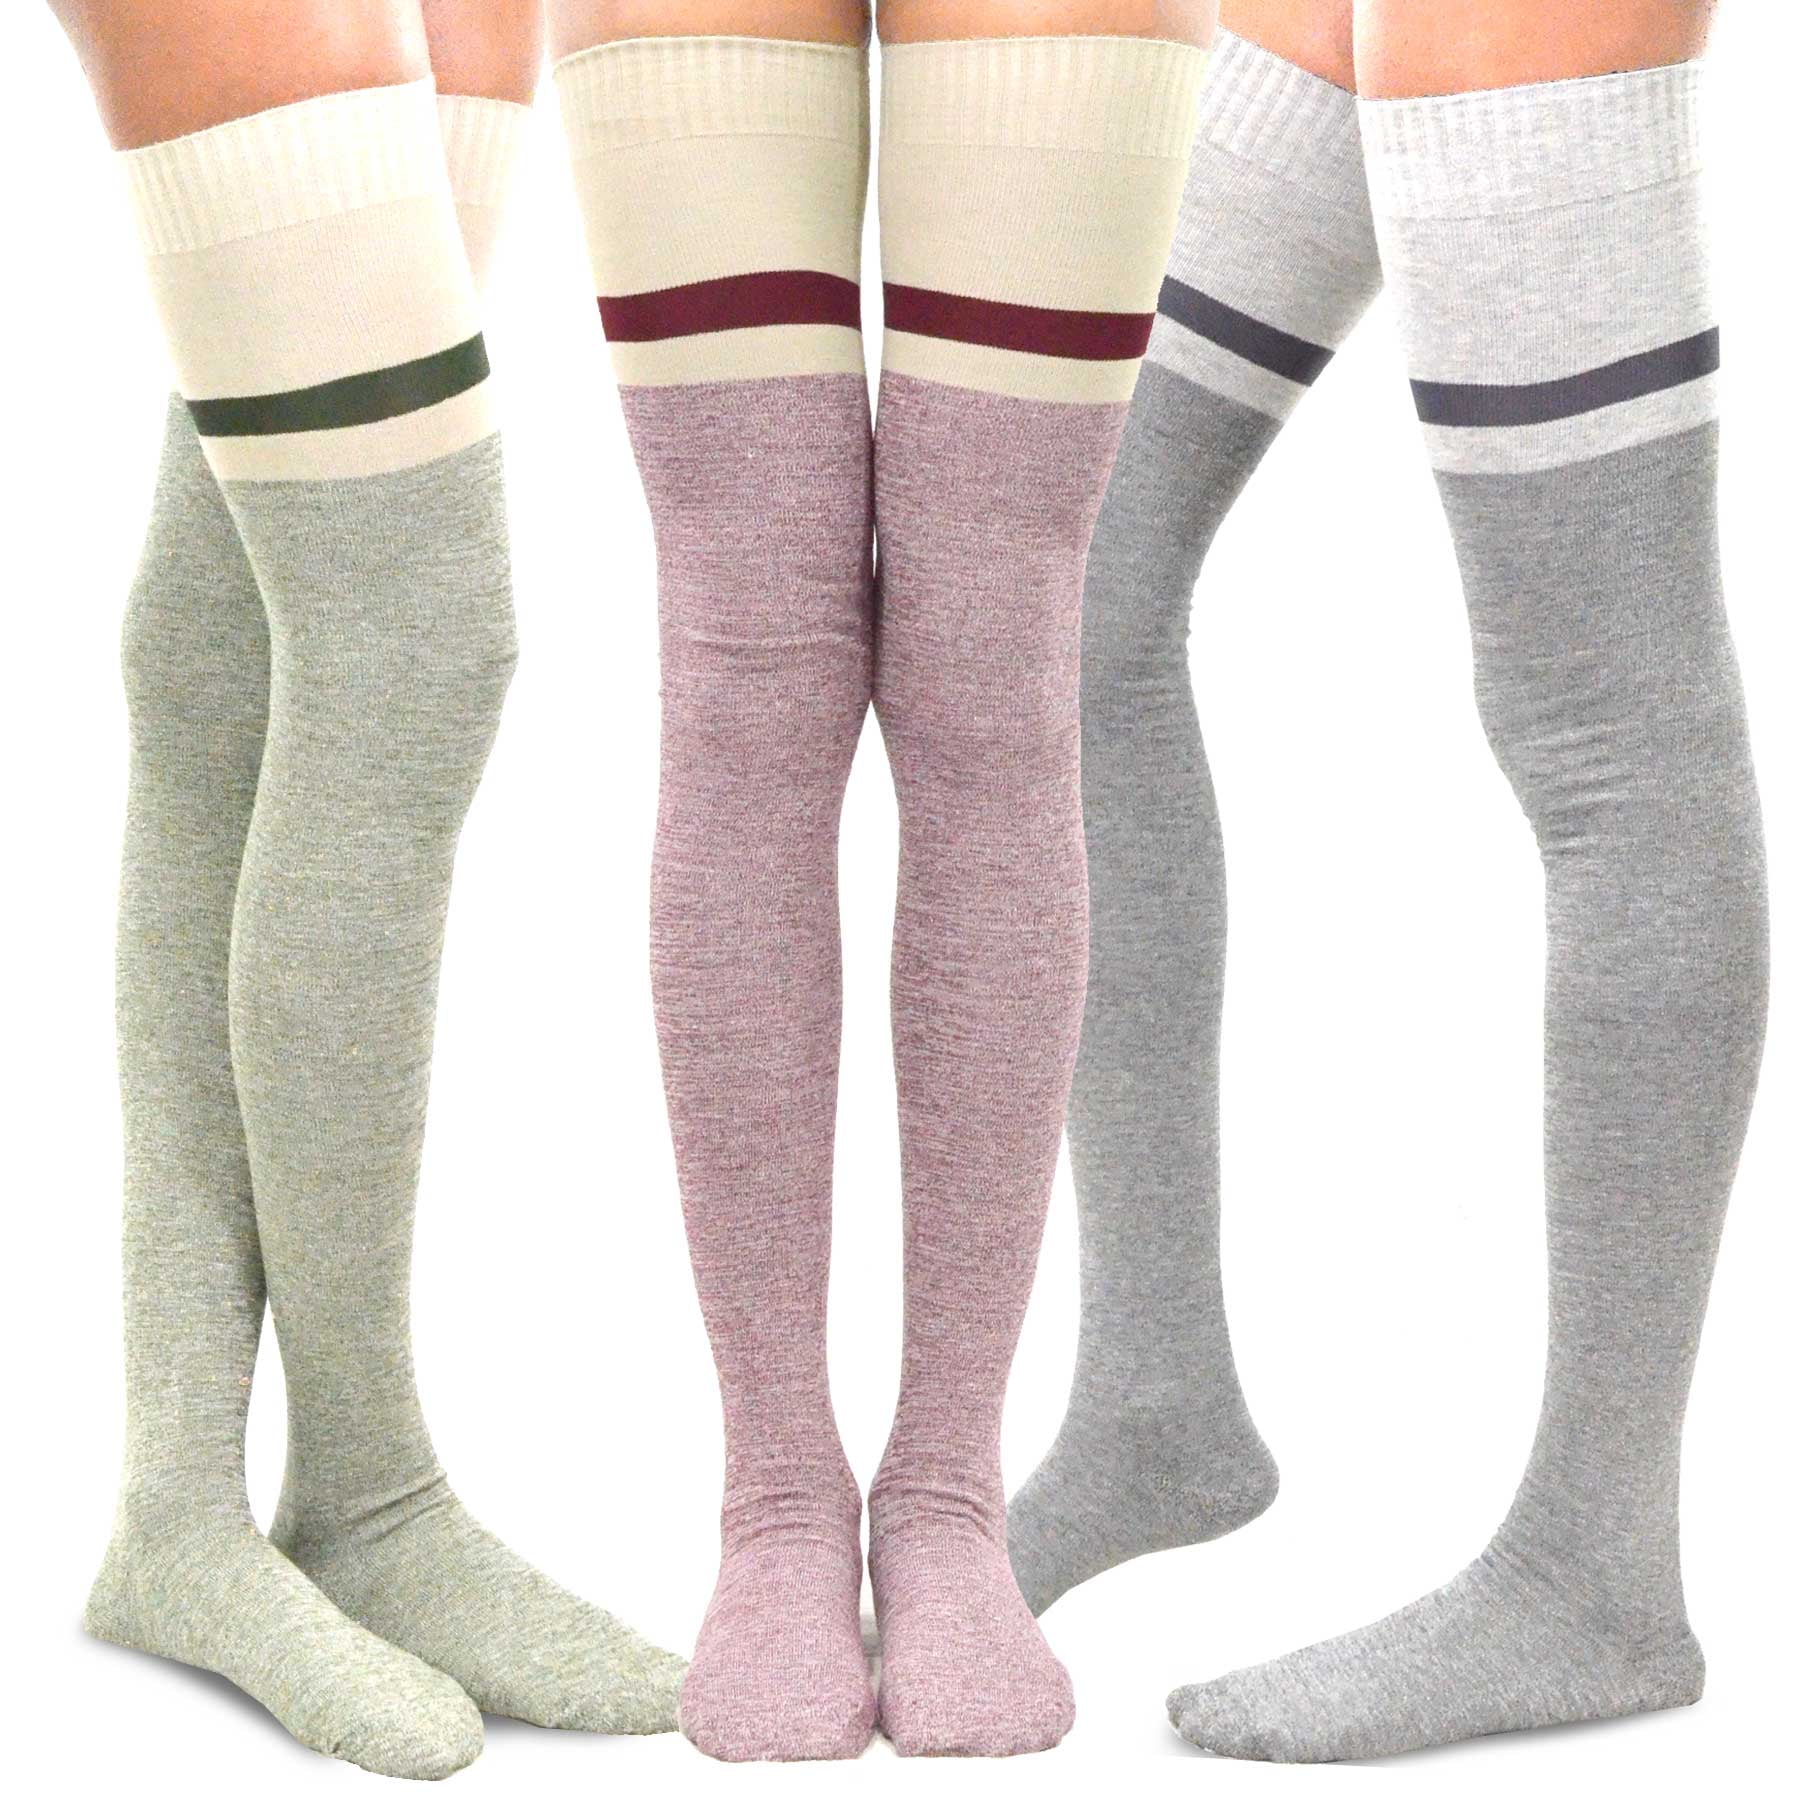 Teehee Women's Extra Long Fashion Thigh High Socks Over the Knee High ...